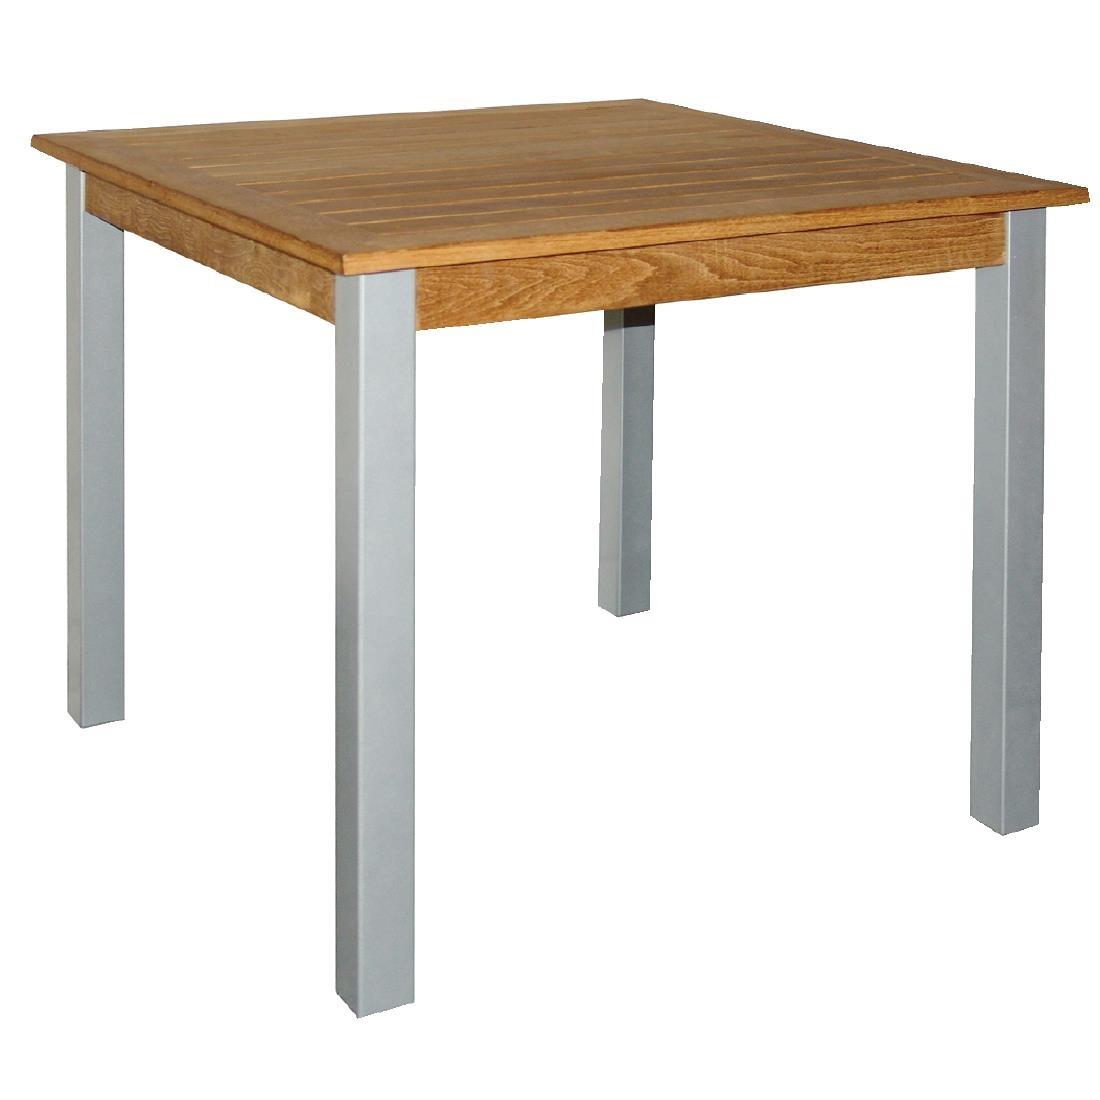 Bolero Wood and Aluminium Square Table 800mm - Y821  - 3